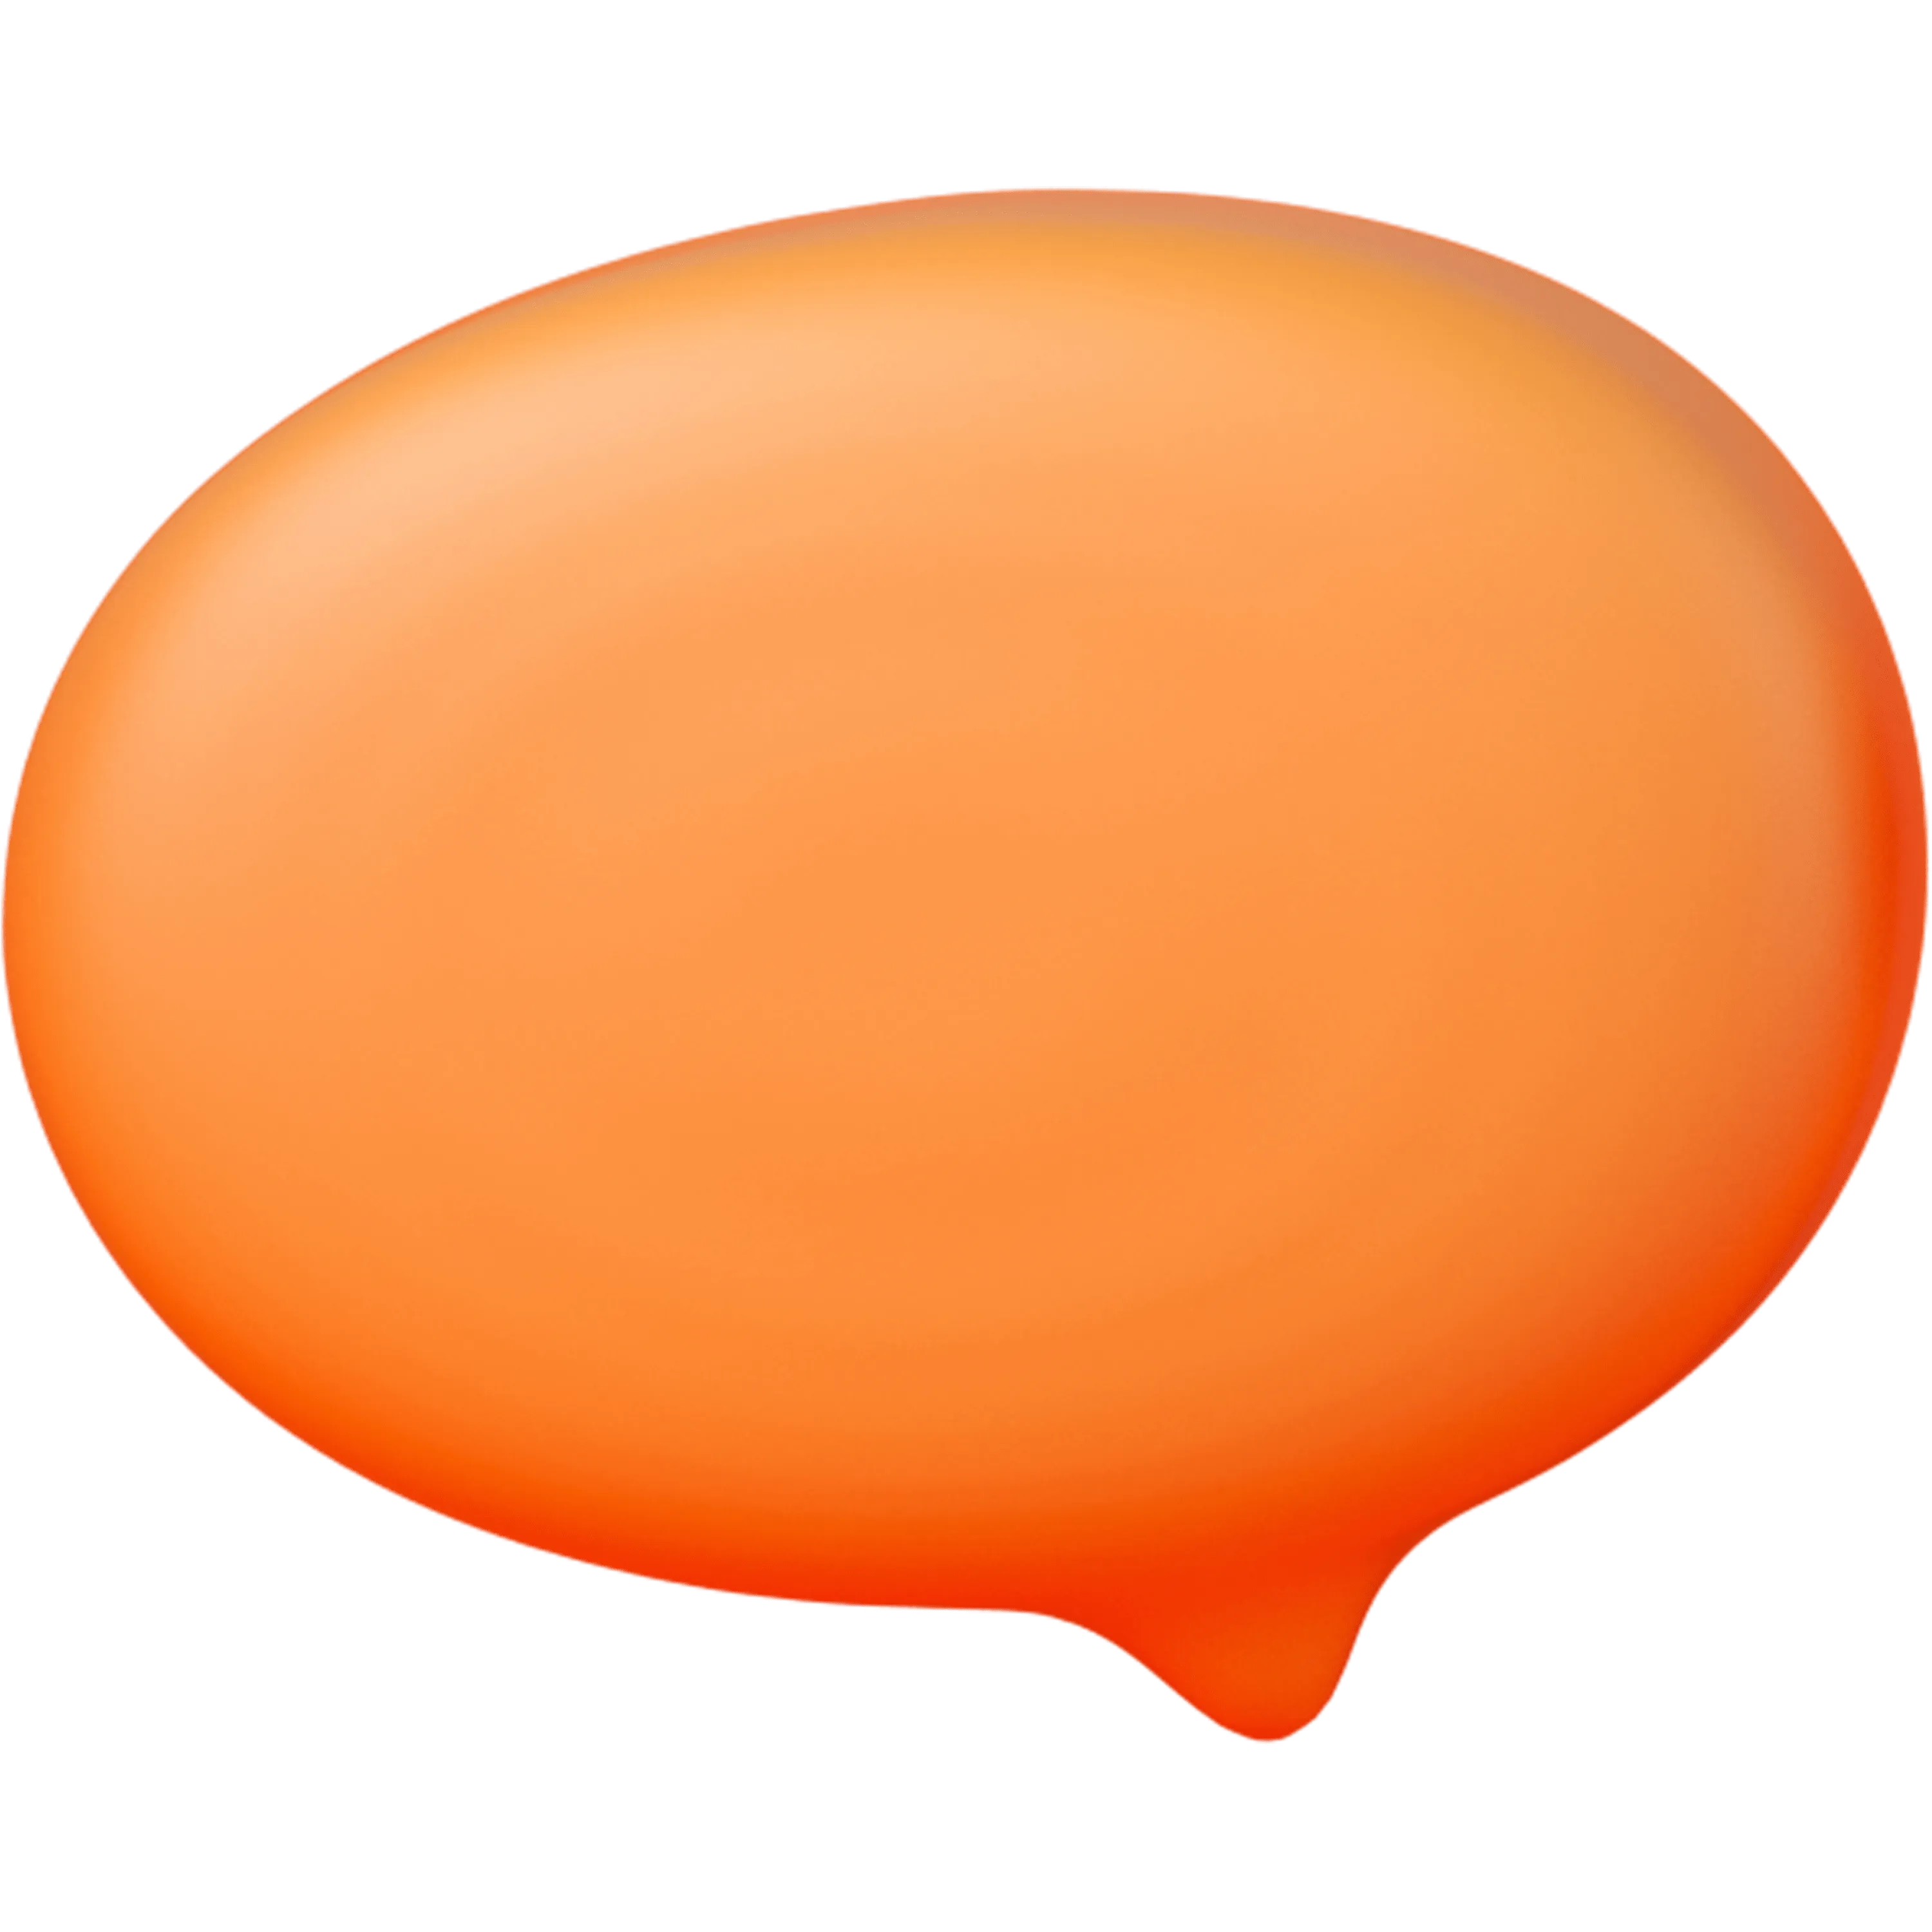 A 3D orange-red speech bubble icon.